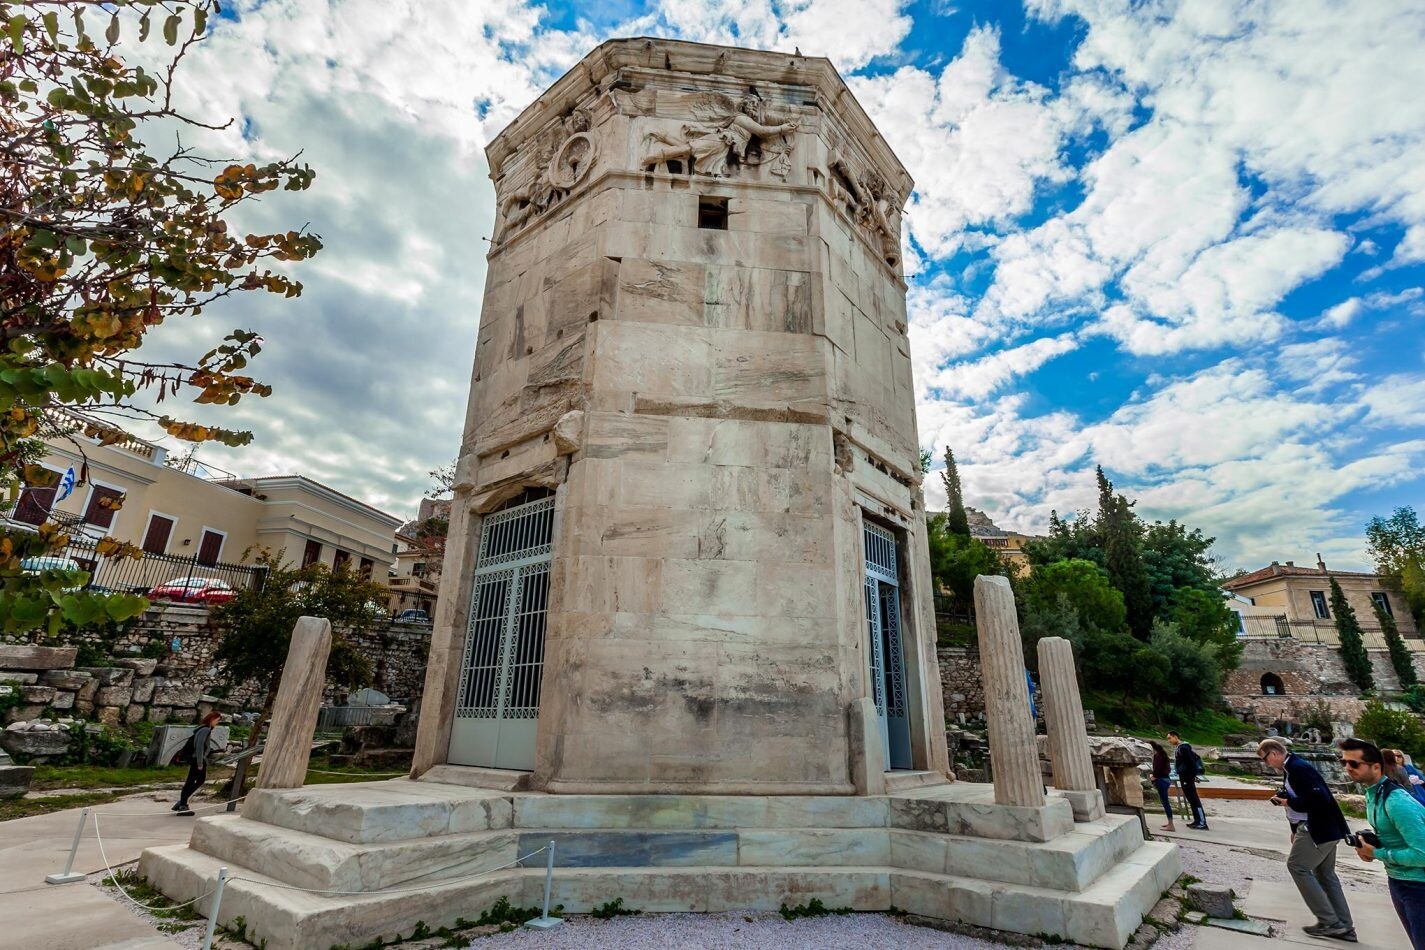 More information about "Μνημείο των Αέρηδων: Ο αρχαιότερος μετεωρολογικός σταθμός του κόσμου βρίσκεται στην Ελλάδα"